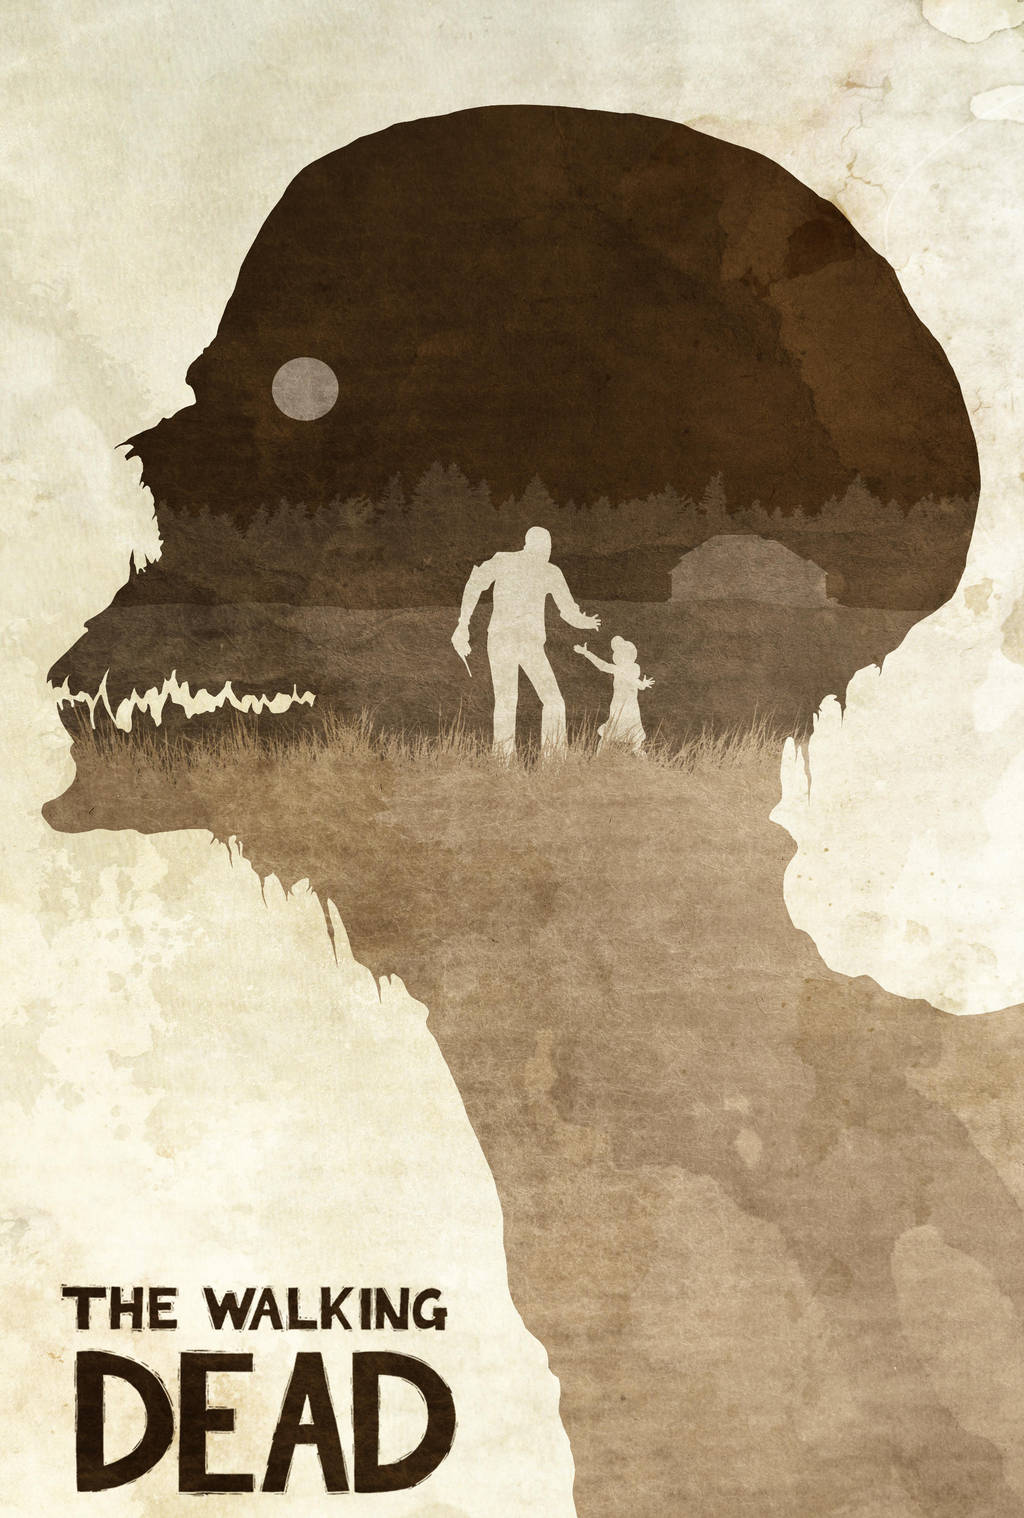 Dead posters. The Walking Dead the game Постер. The Walking Dead game плакат. Ходячие мертвецы арт Постер. Арт Постер.